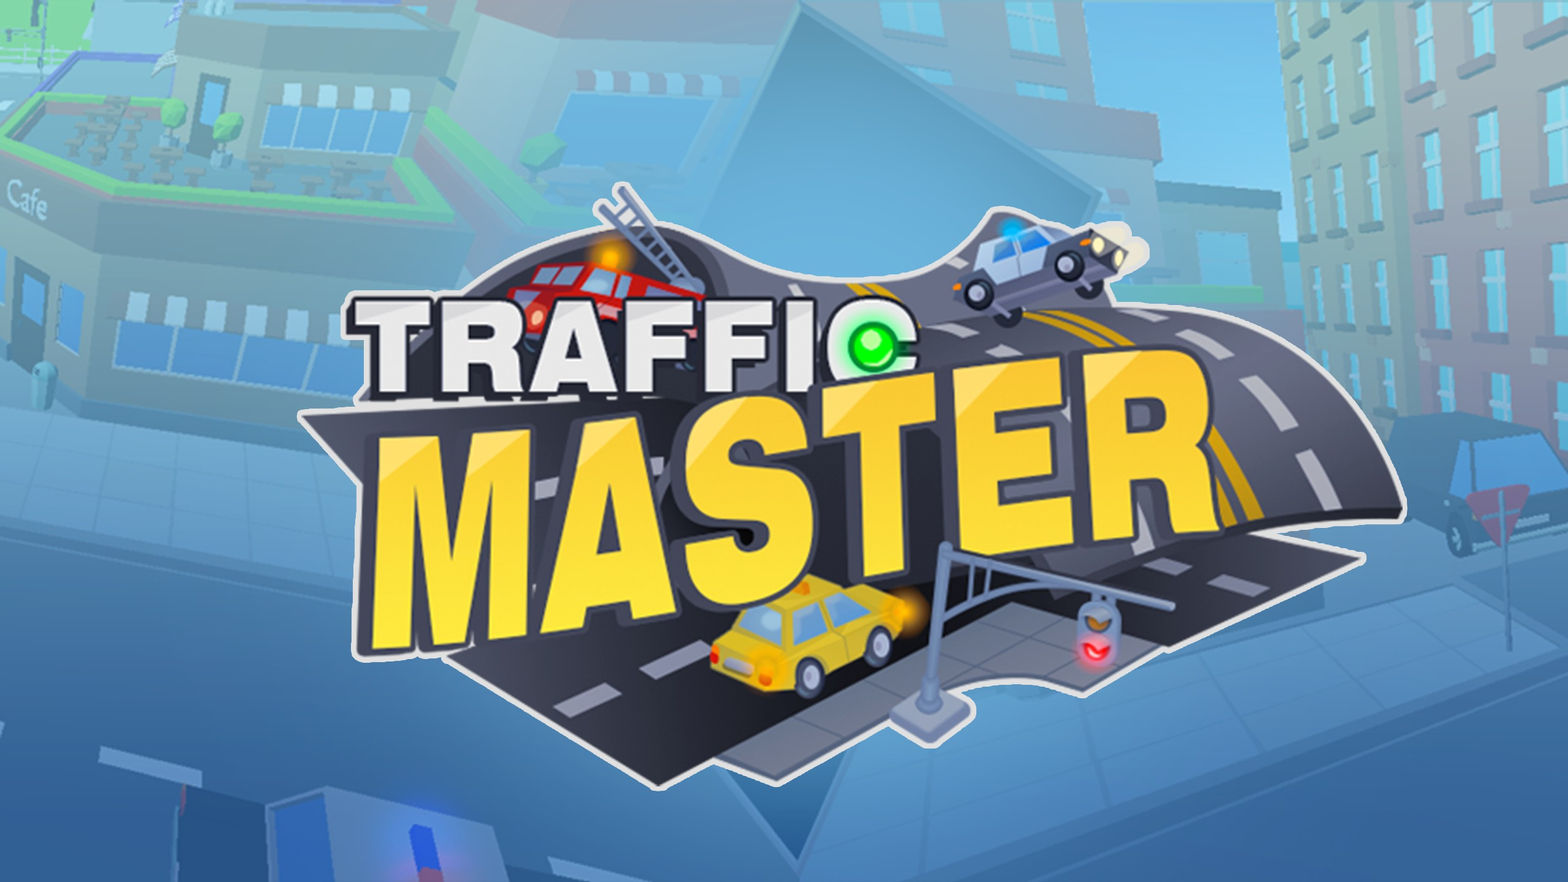 Traffic Master